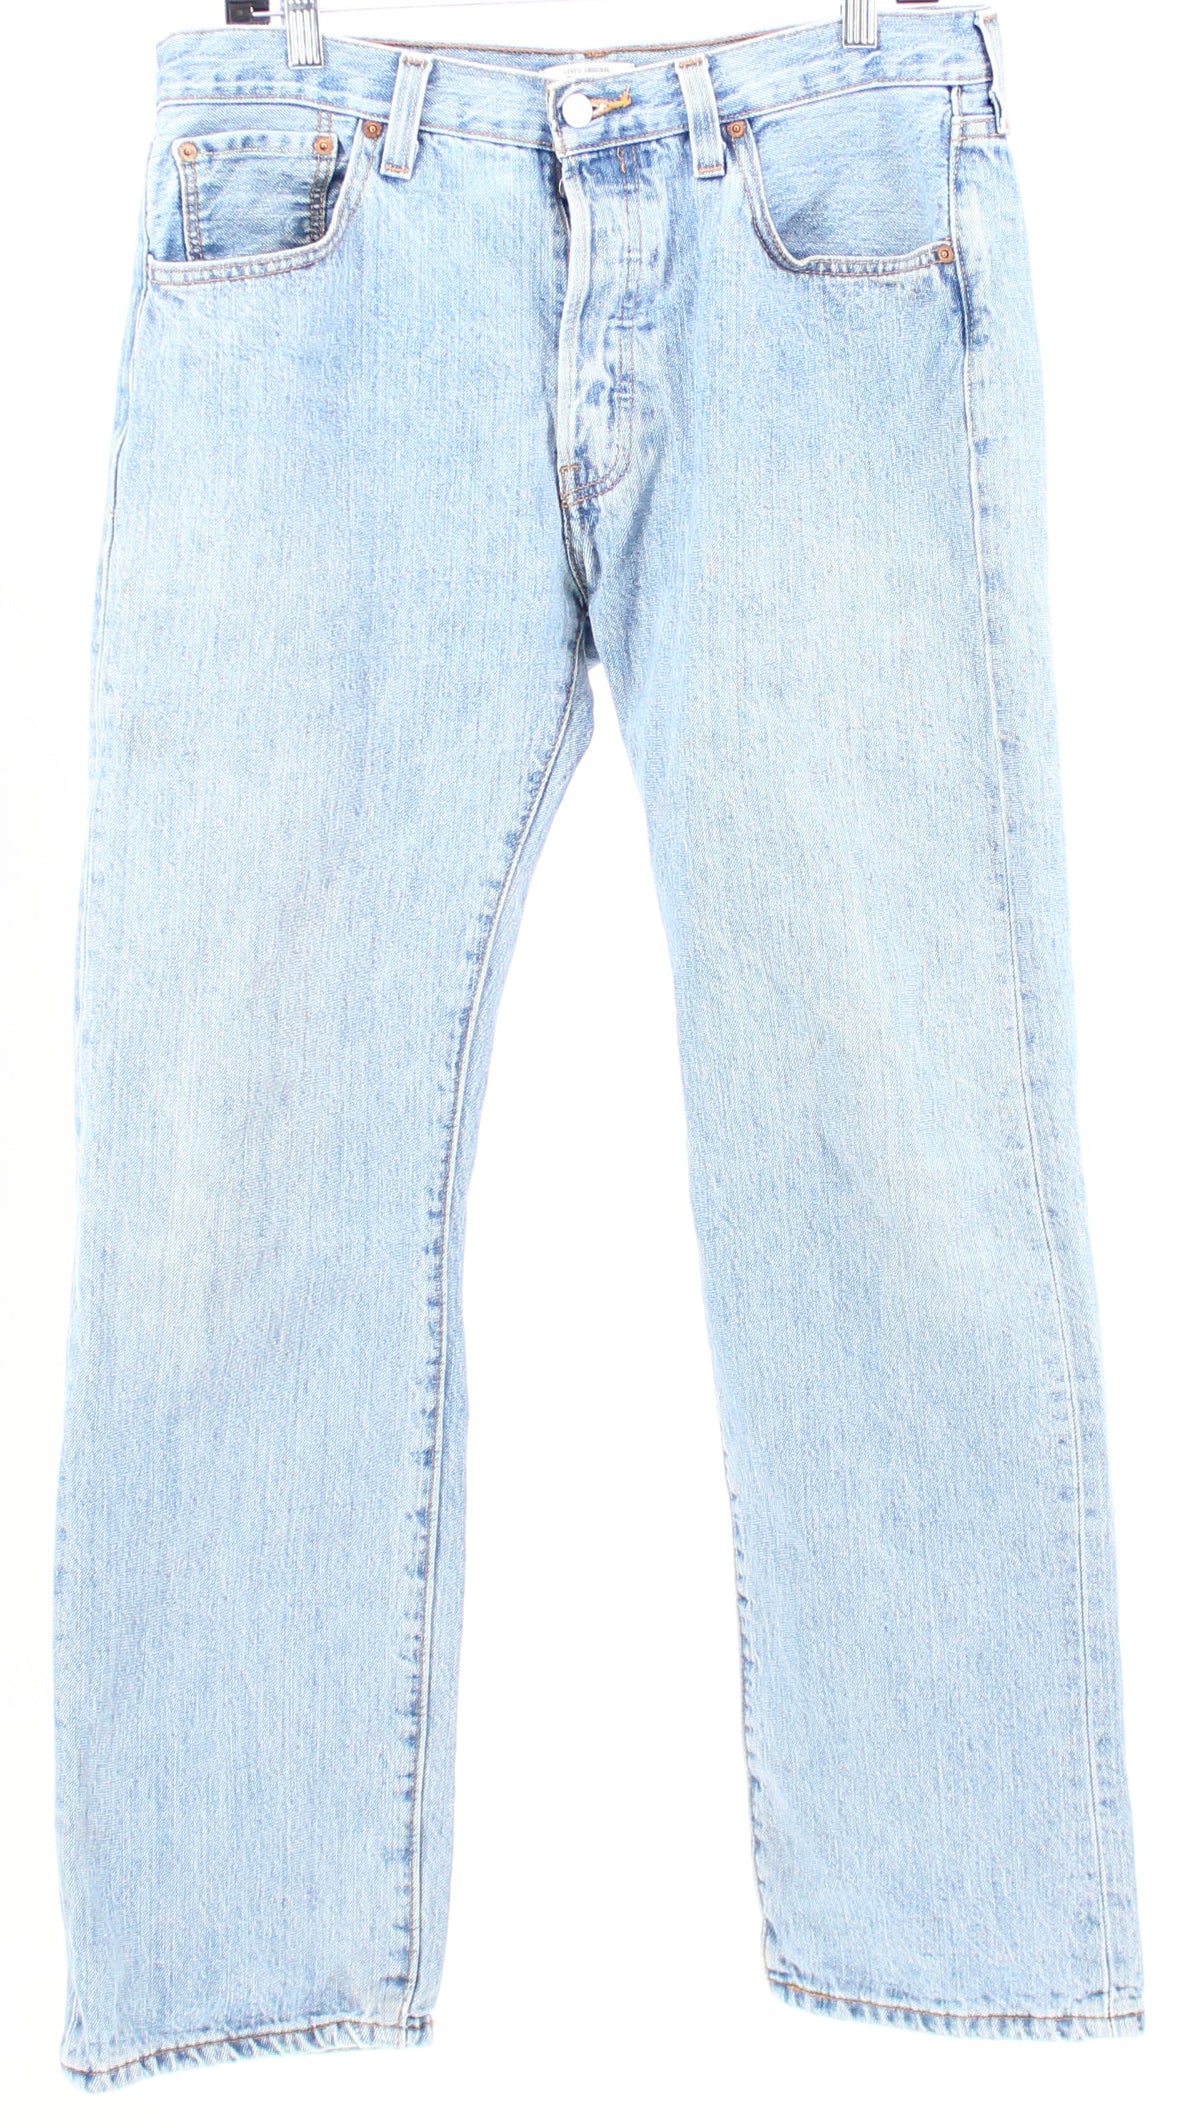 Levis Orignal 501 Straight Leg Light Wash Jeans